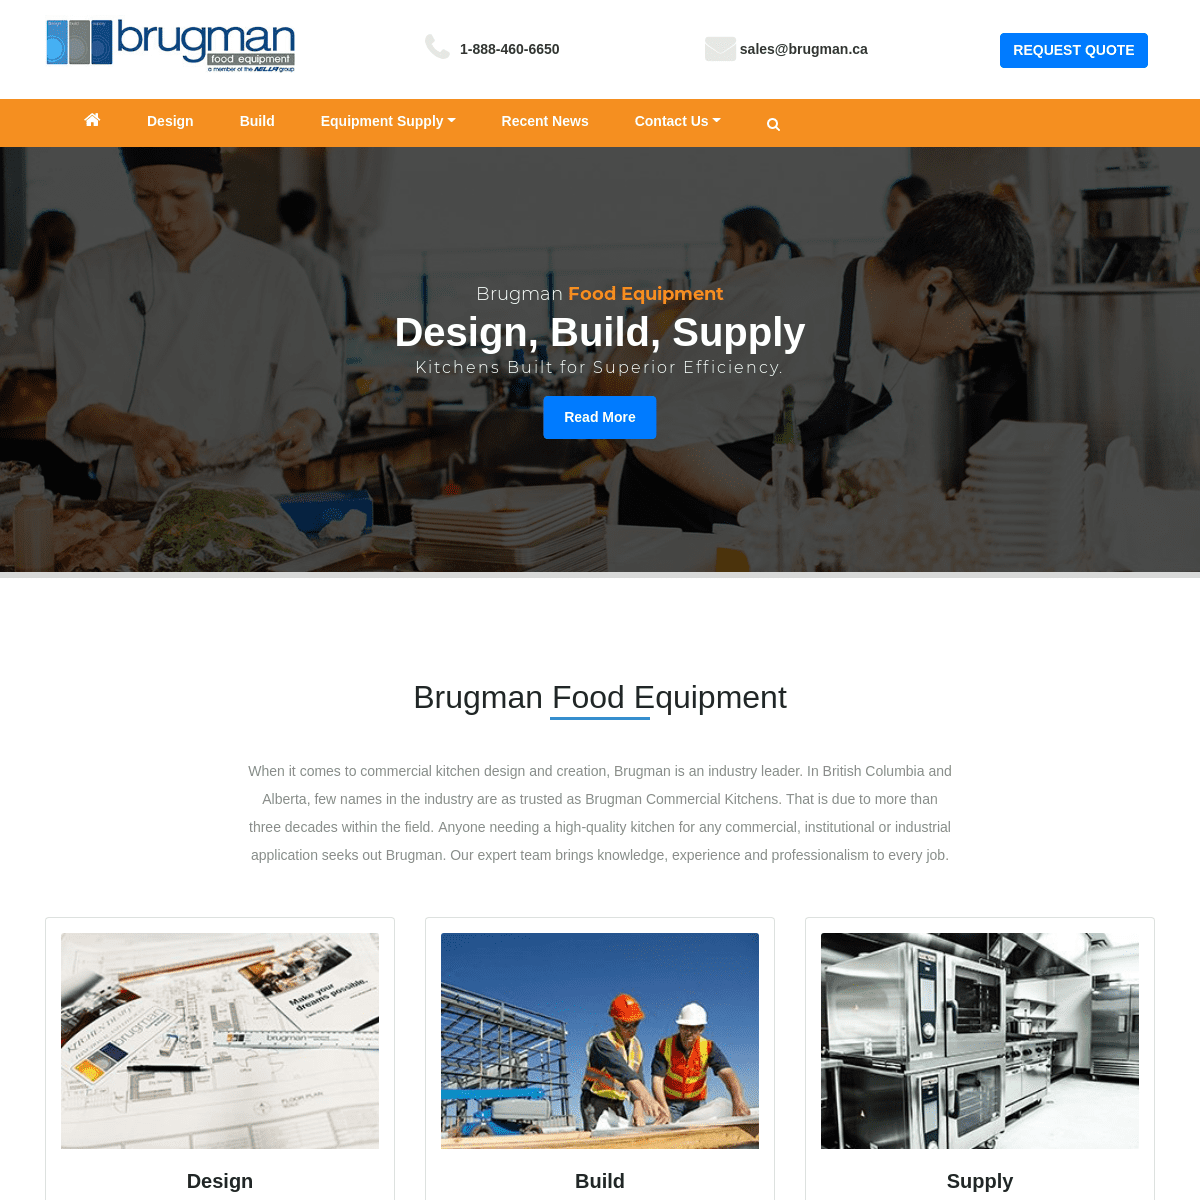 Brugman Food Equipment - Kitchens Built for Superior Efficiency